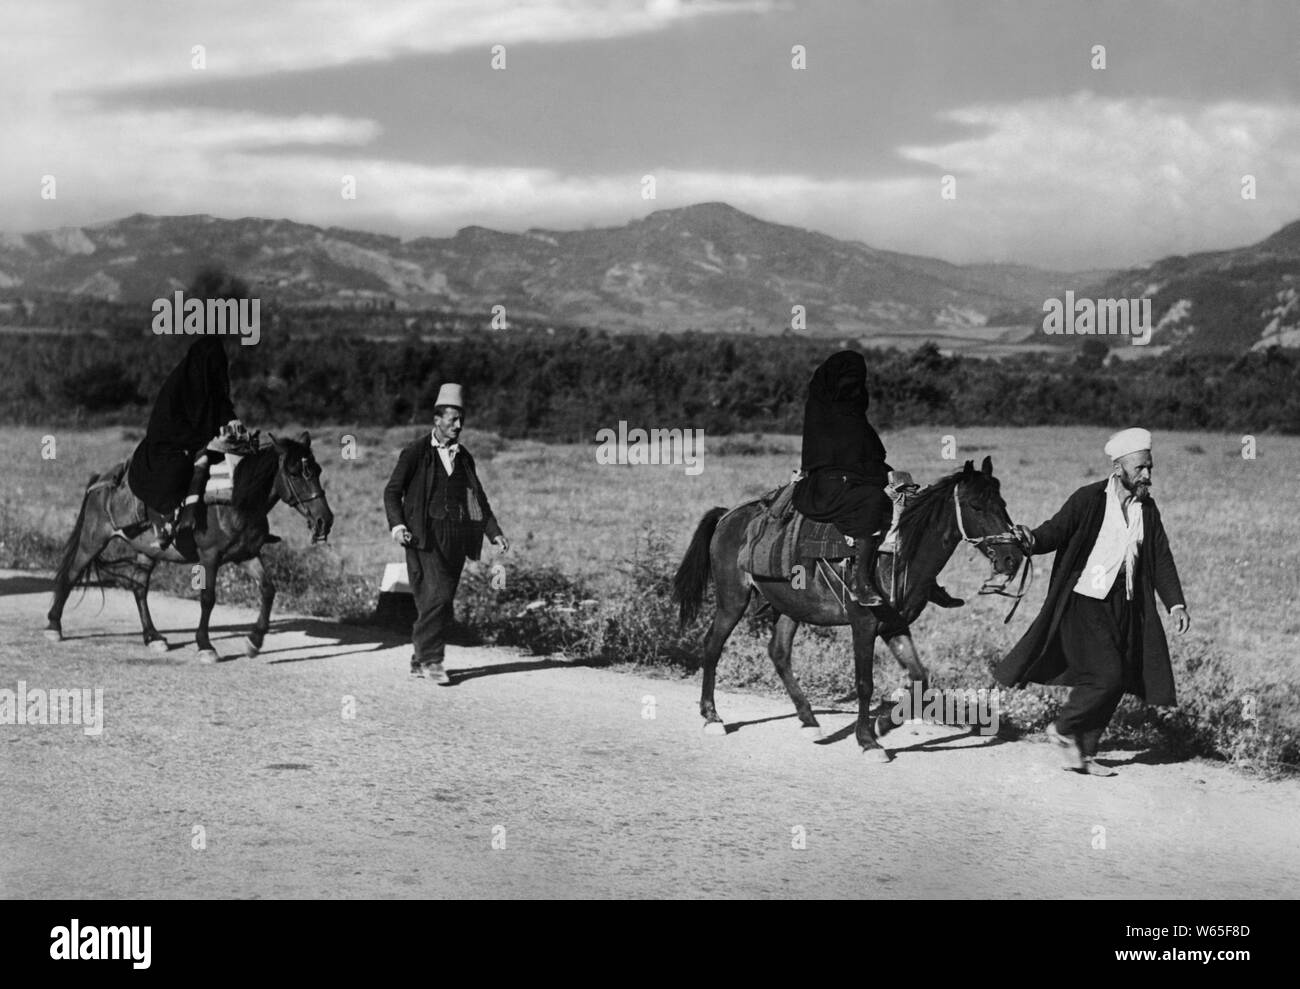 Albanian couples on horseback, 1942 Stock Photo